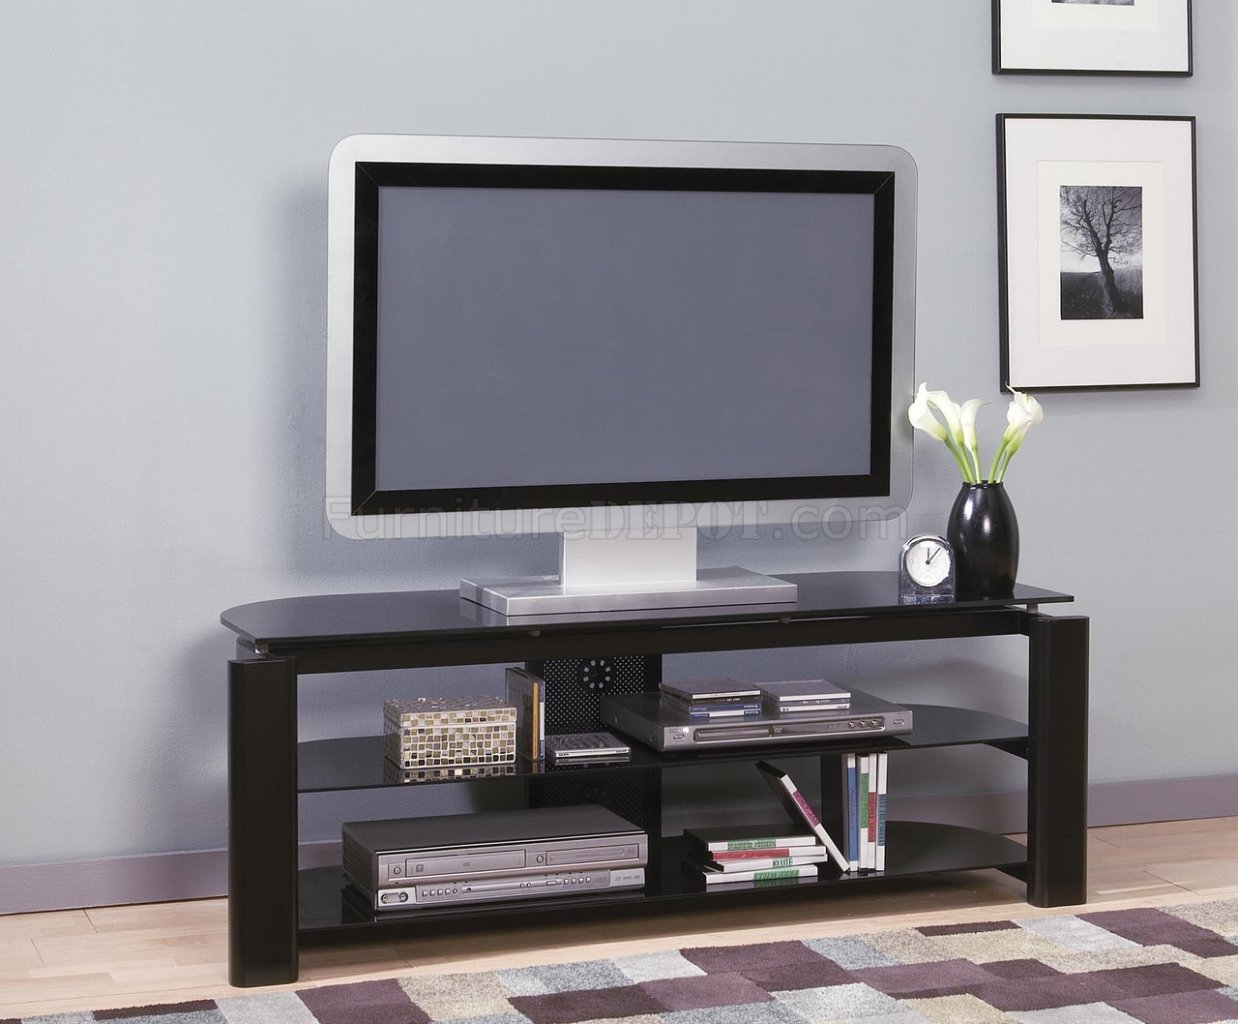 Black Glass & Metal Modern TV Stand w/Storage Shelves